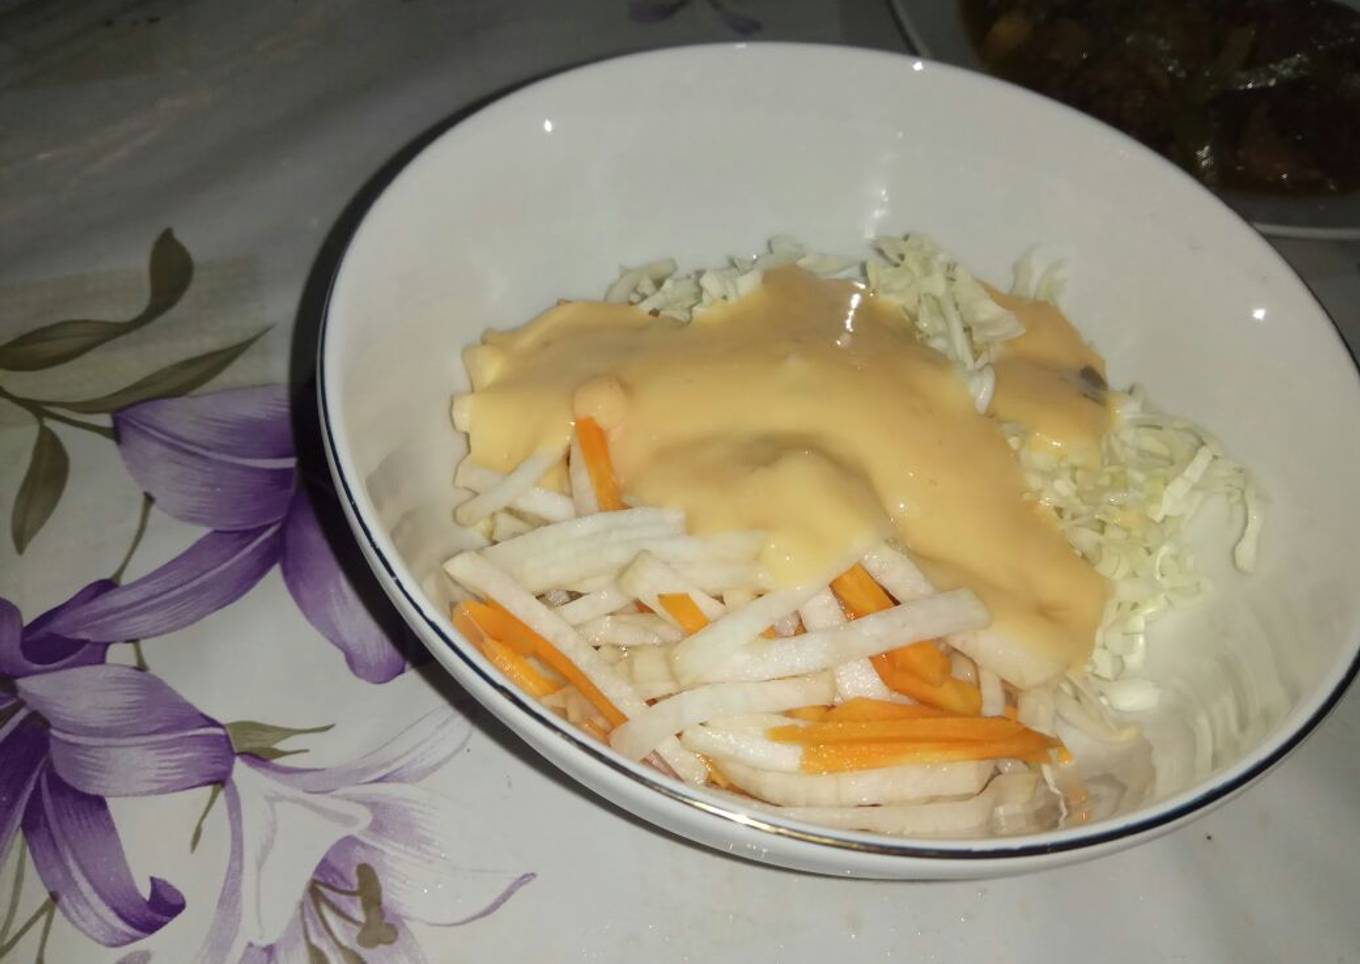 Salad ala hokben - resep kuliner nusantara